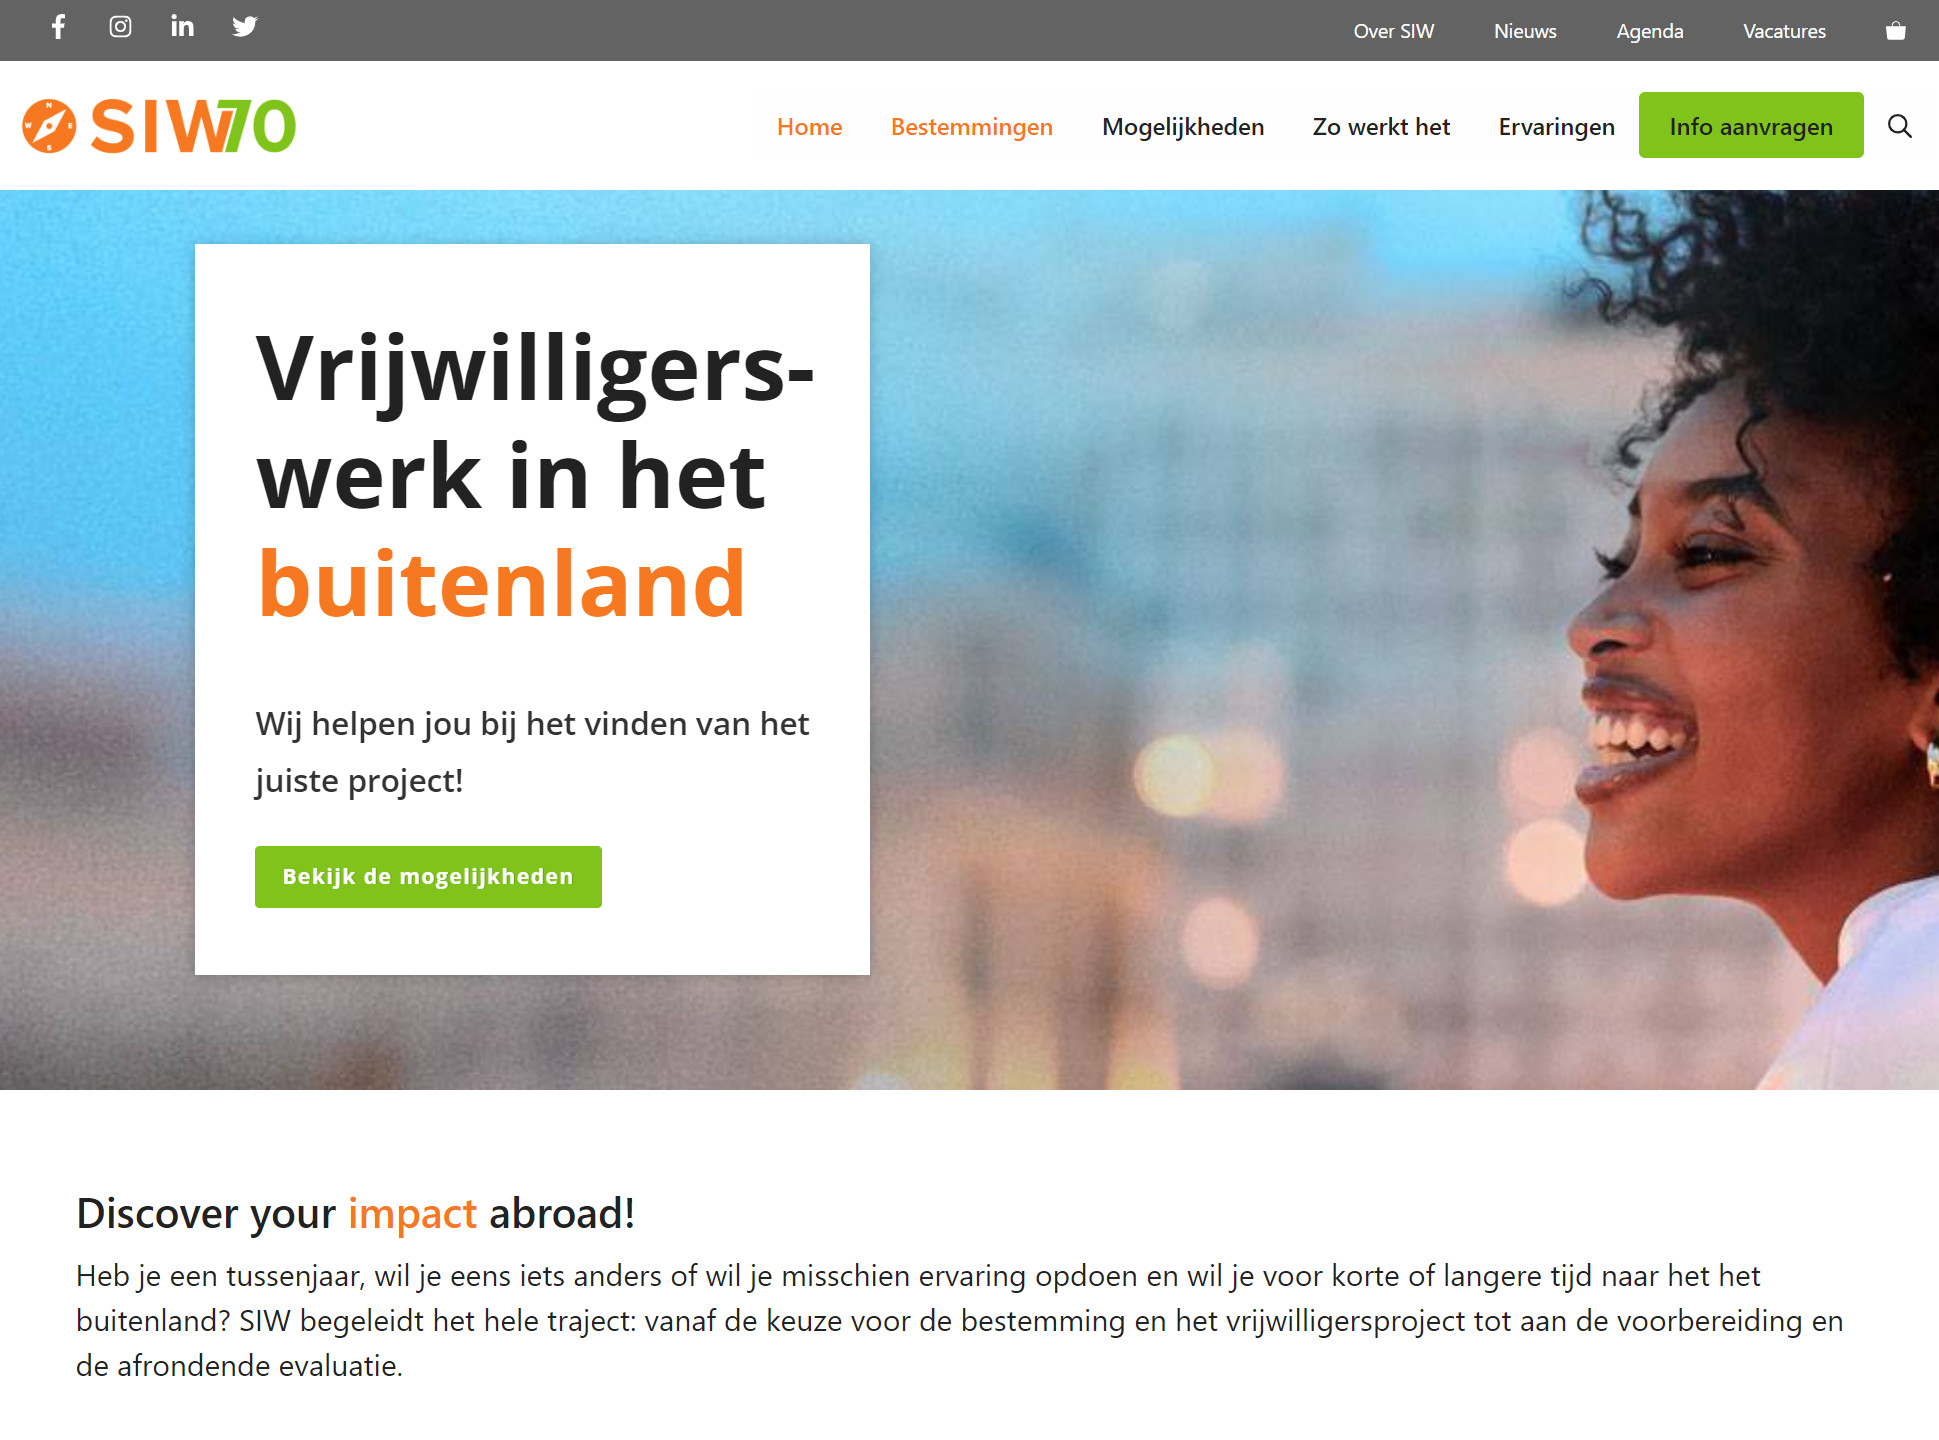 www.siw.nl